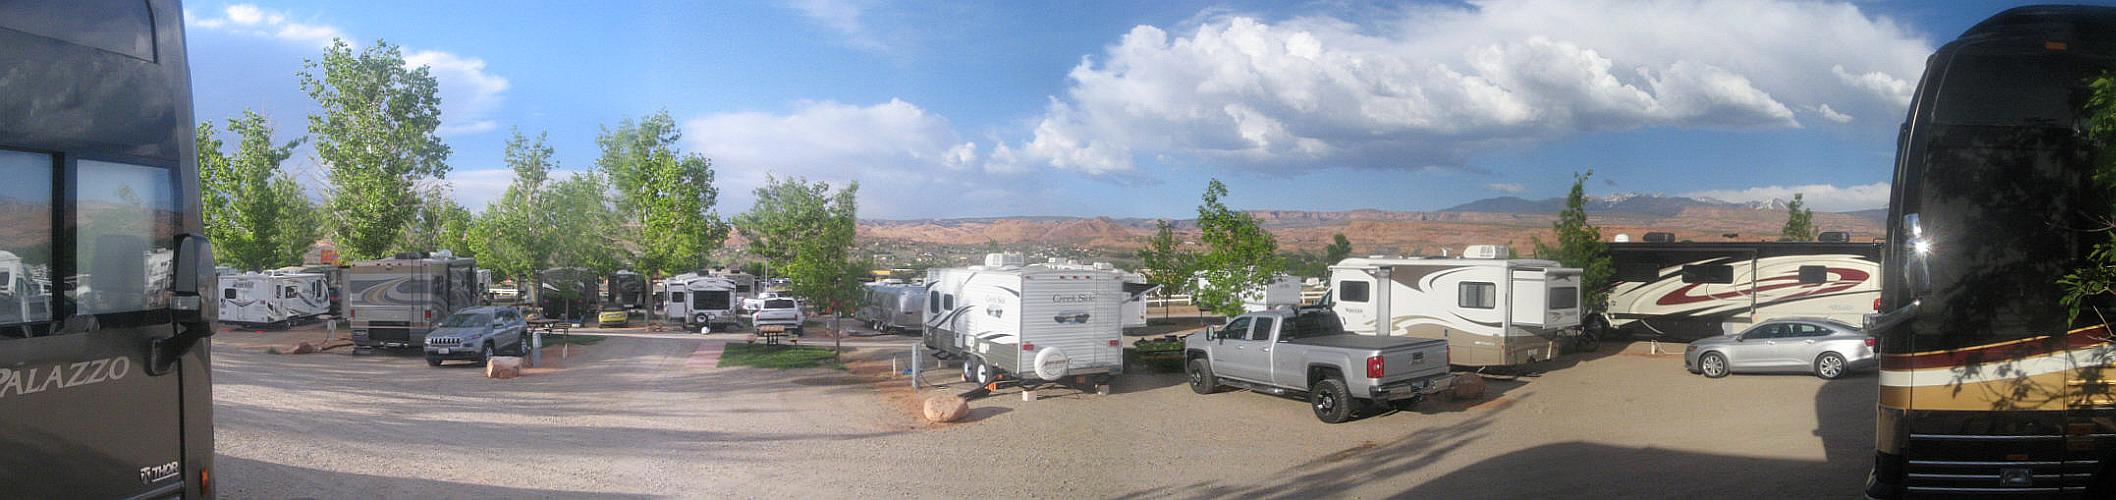 Campground Panorama